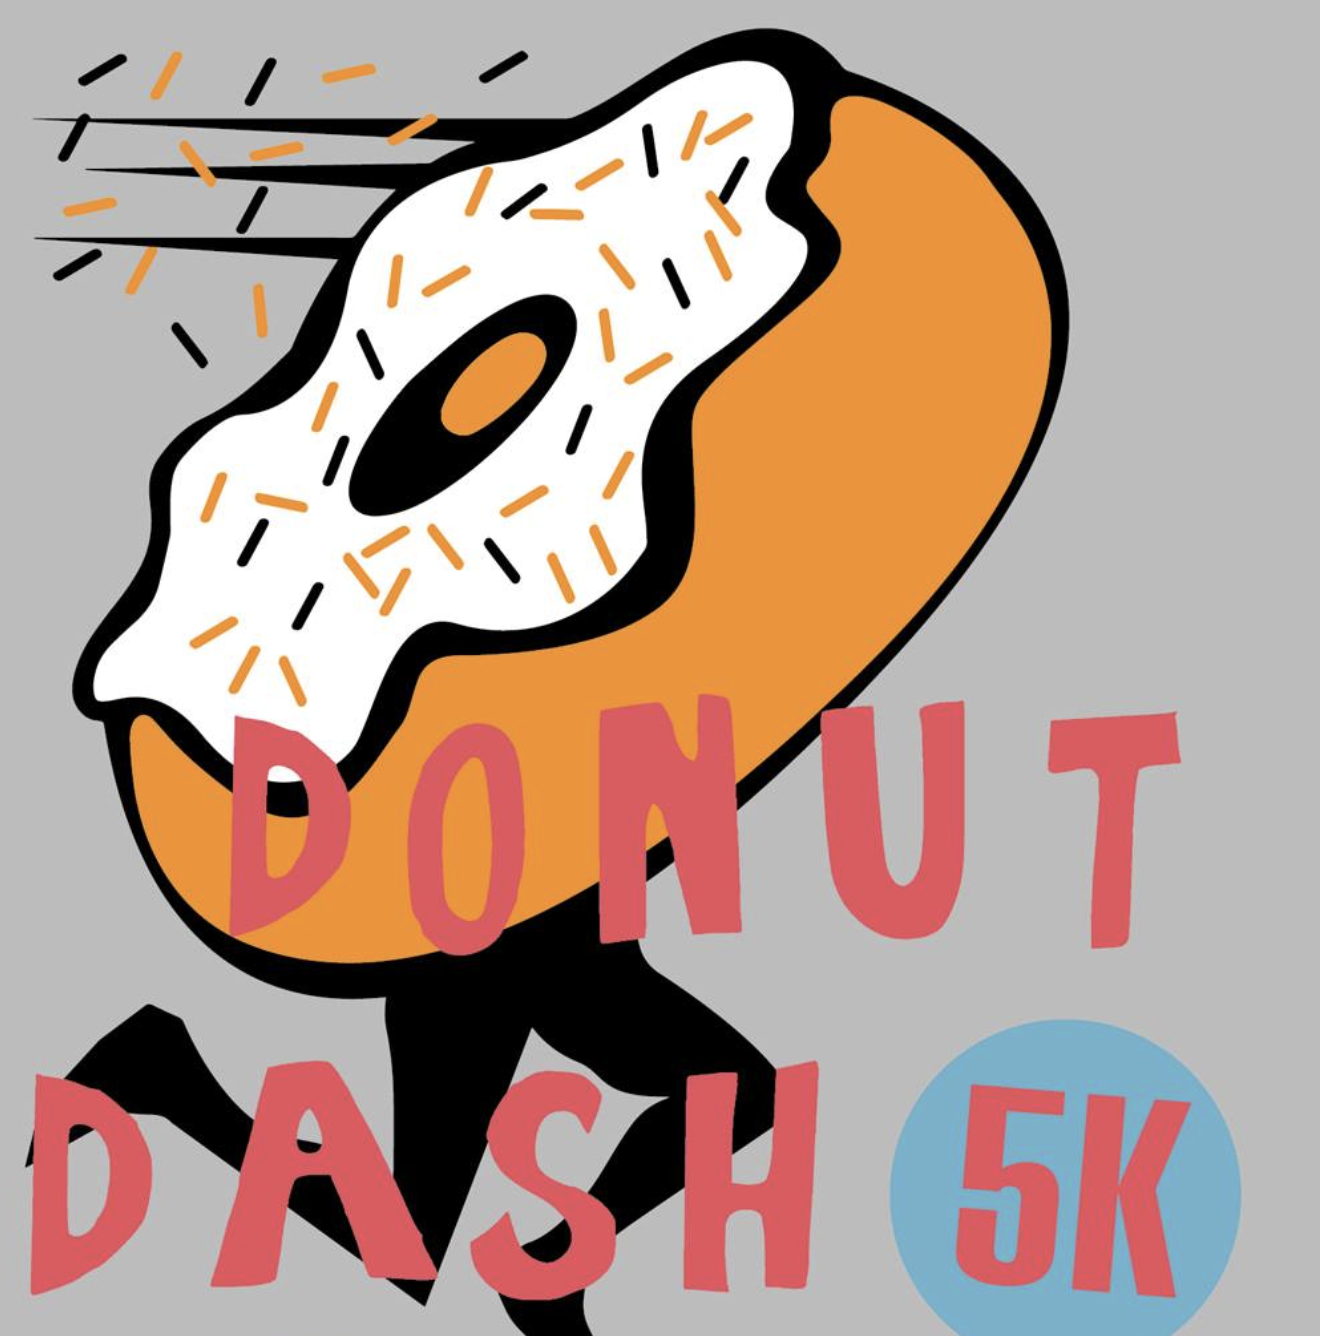 Club Oly Donut Dash 5K (WA) logo on RaceRaves